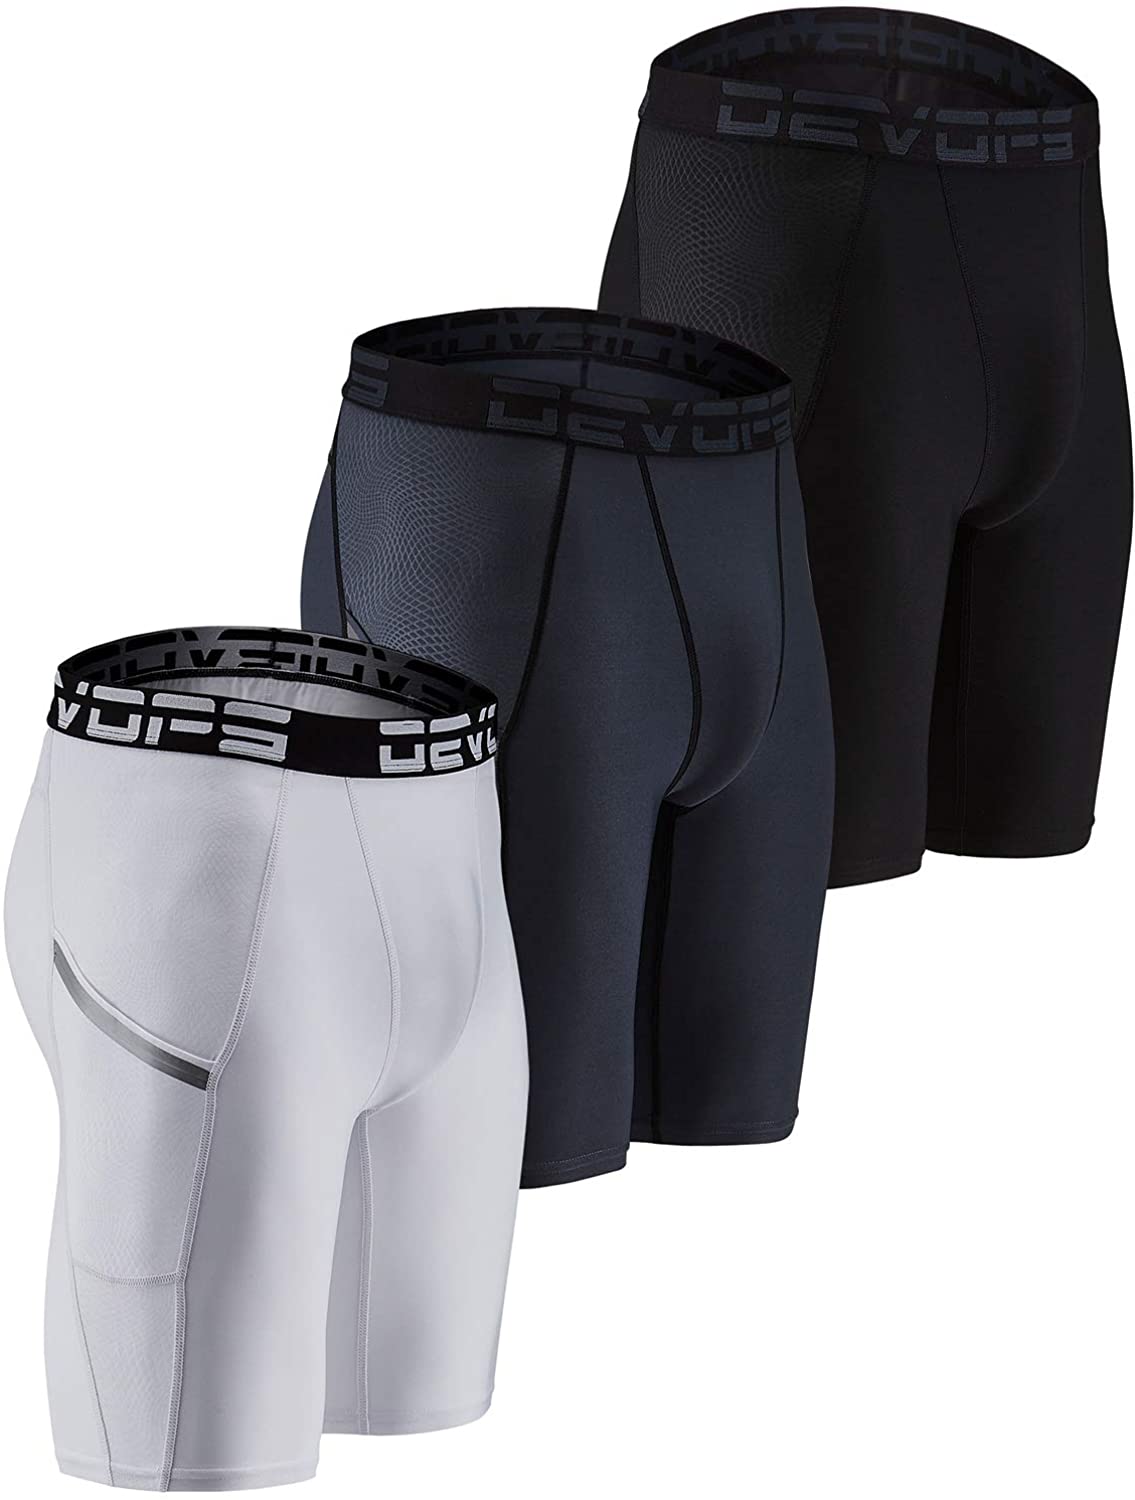 3 Pack DEVOPS Men's Compression Shorts Underwear